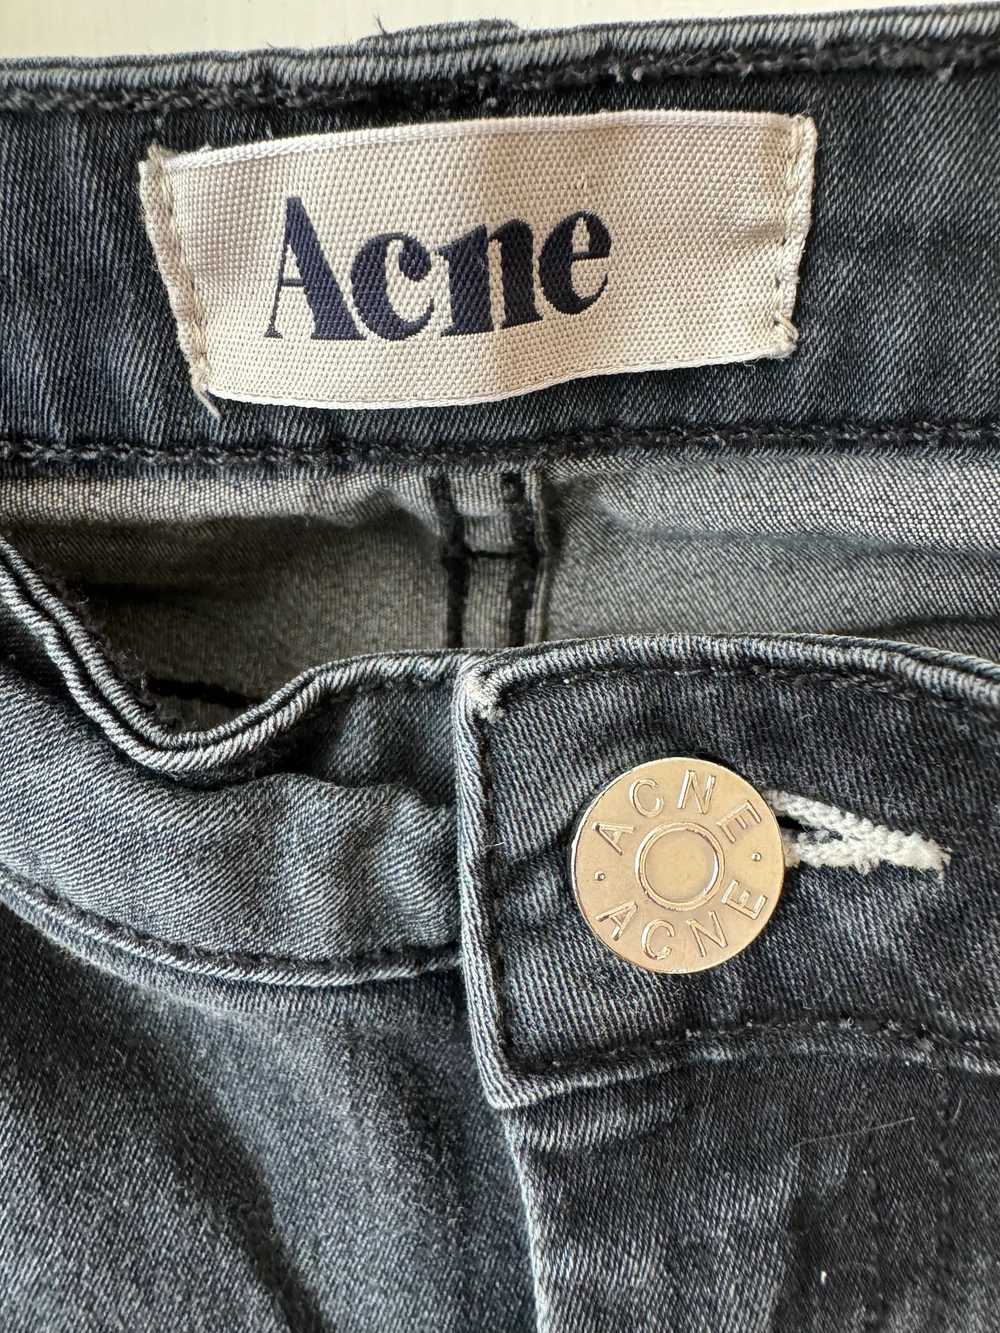 Acne Studios Acne Studios Kex/wet black Jeans - image 2